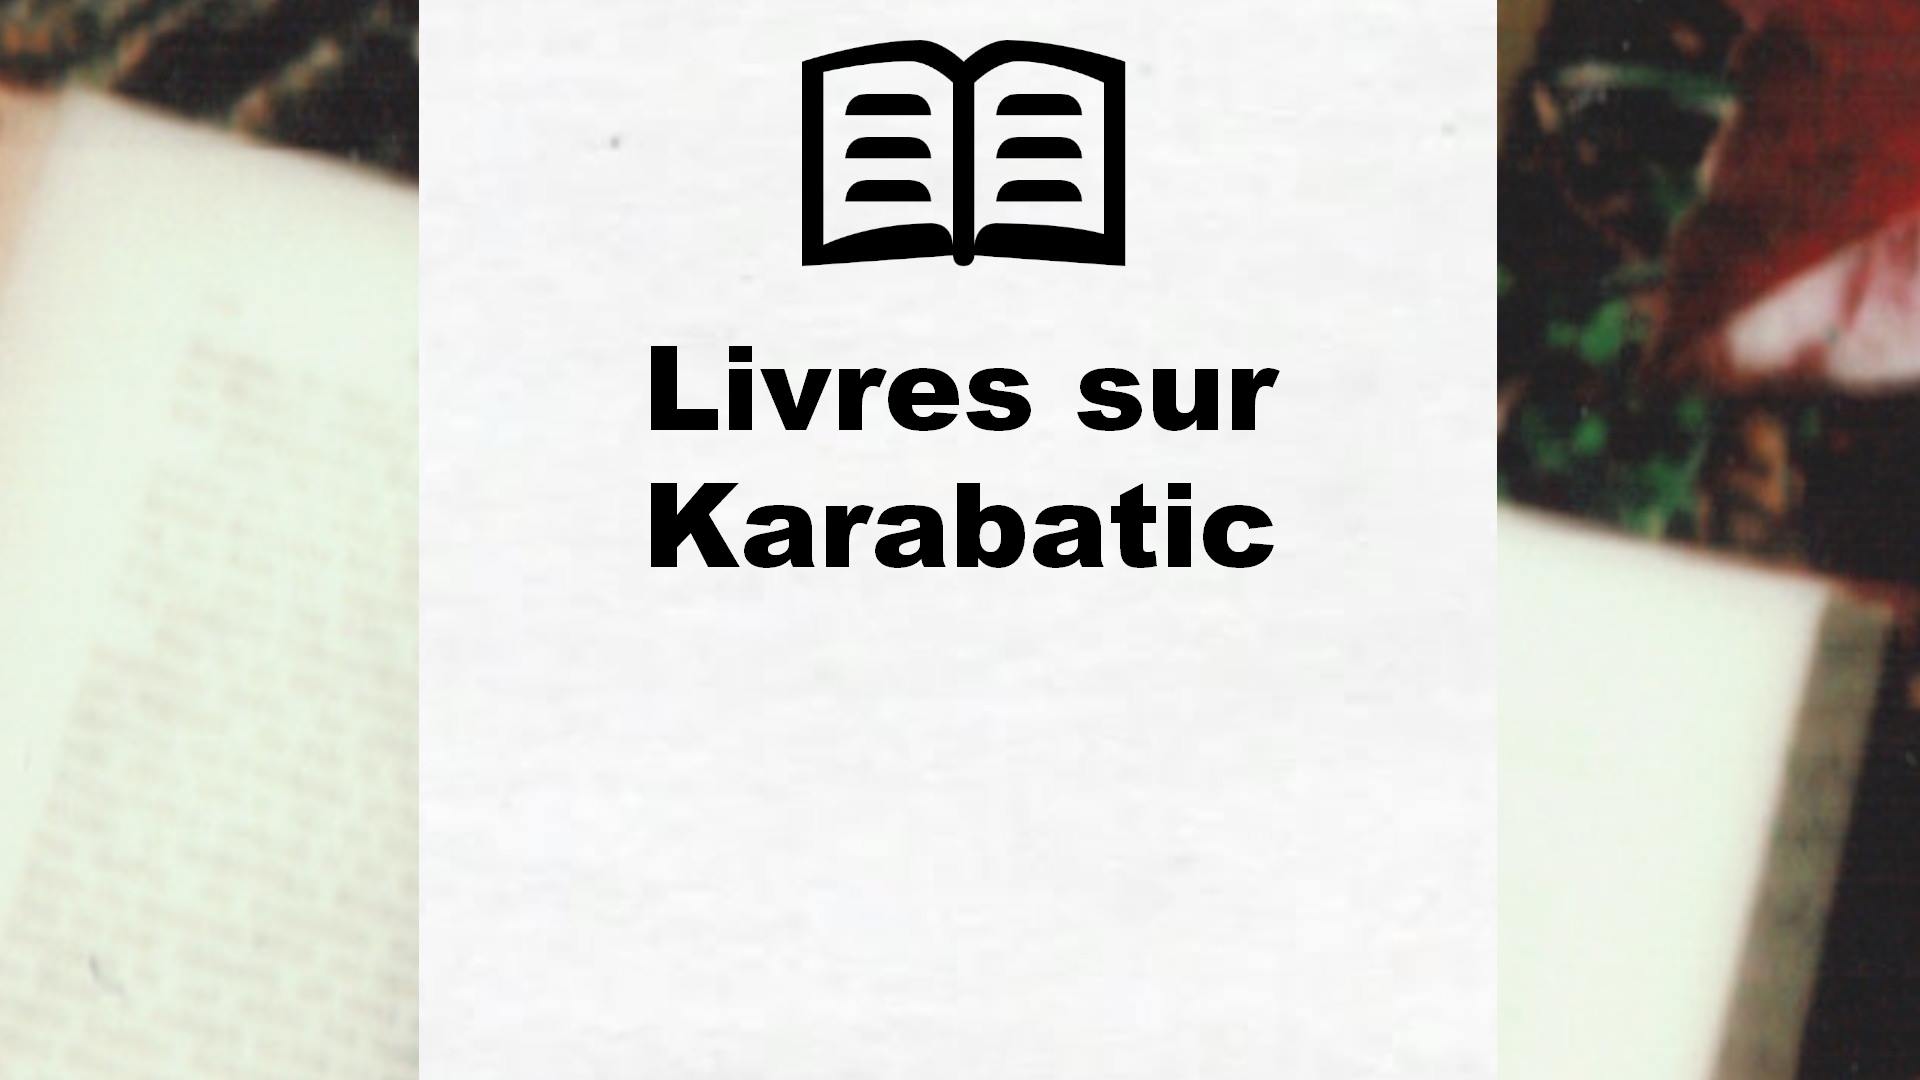 Livres sur Karabatic